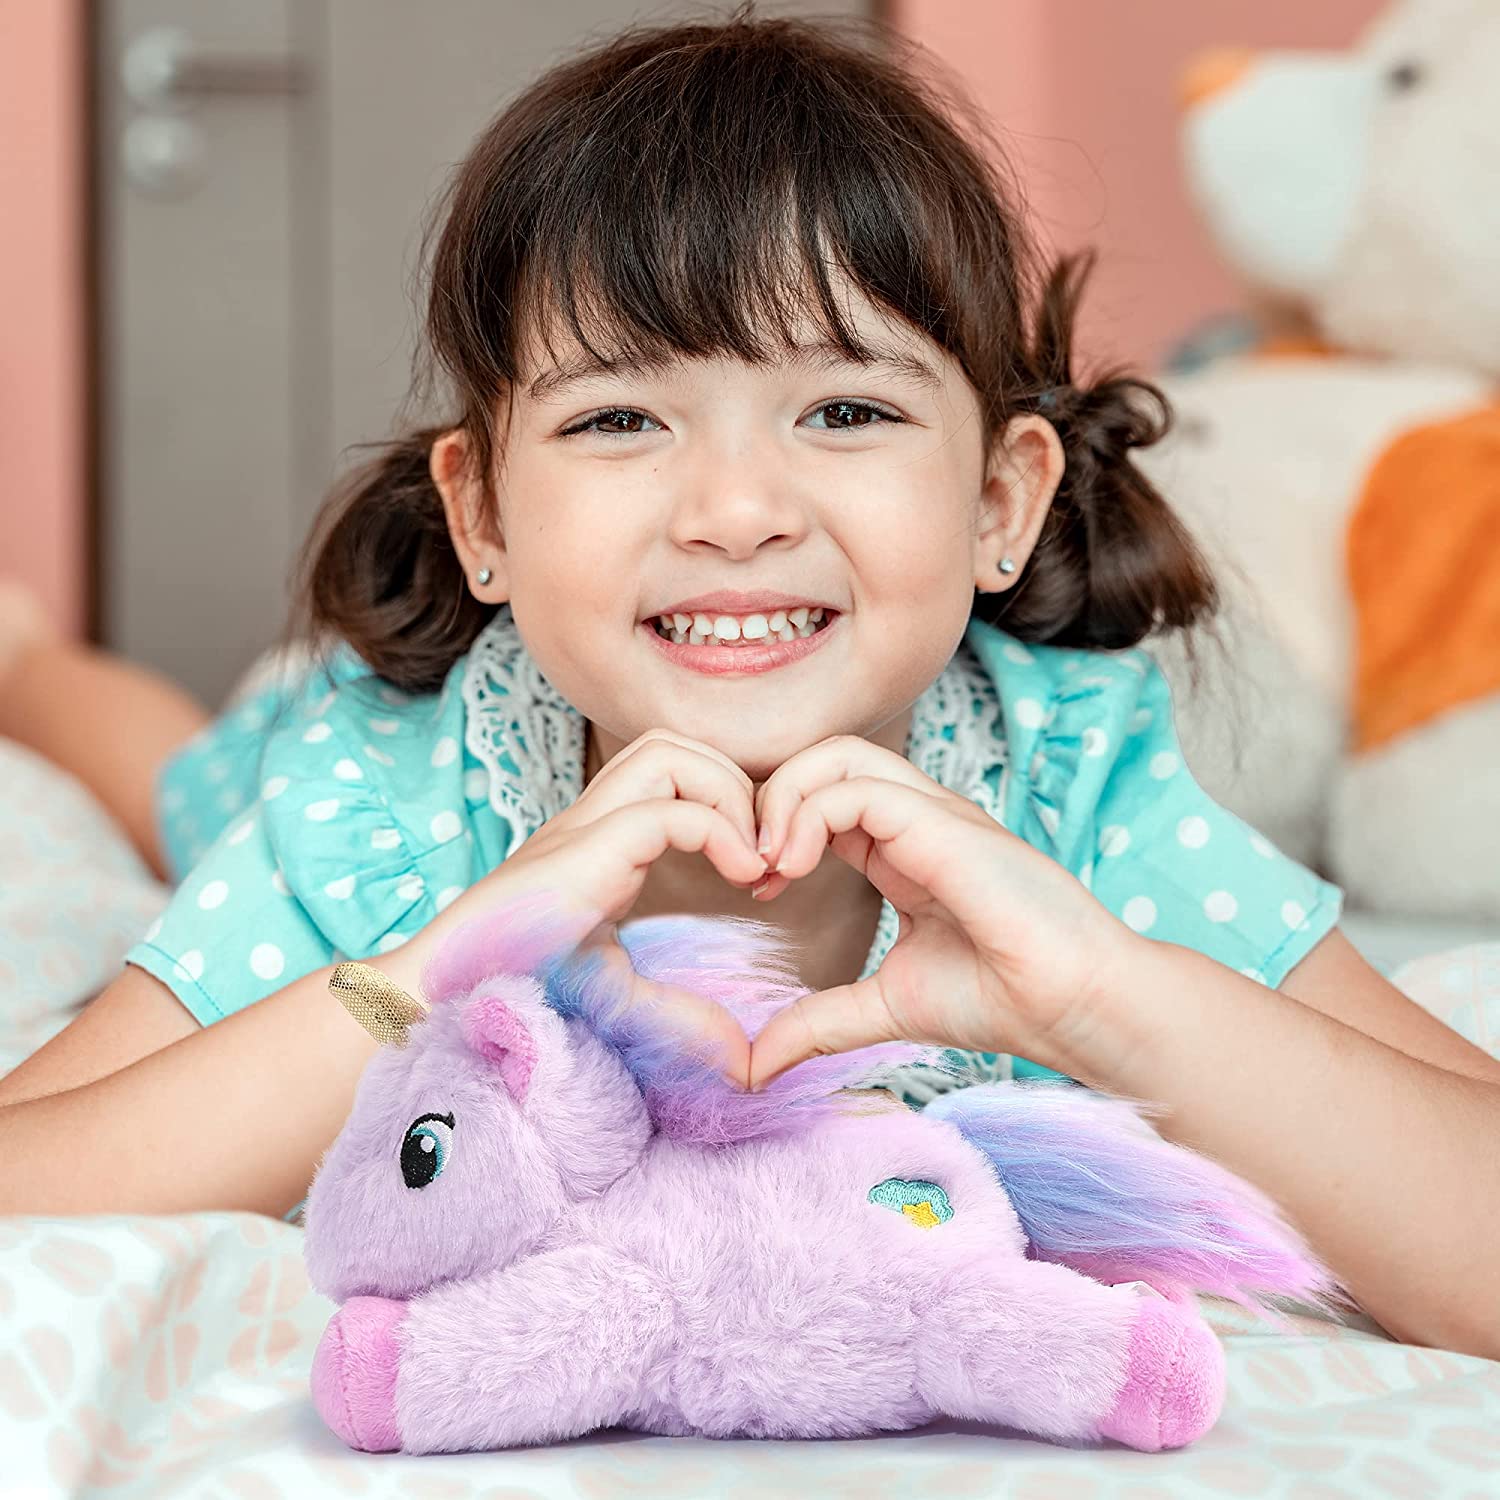 LotFancy 2 Pcs 7 in Unicorn Stuffed Animal Plush Toys Gift for Kids Girls Boys, Purple and White - image 5 of 6